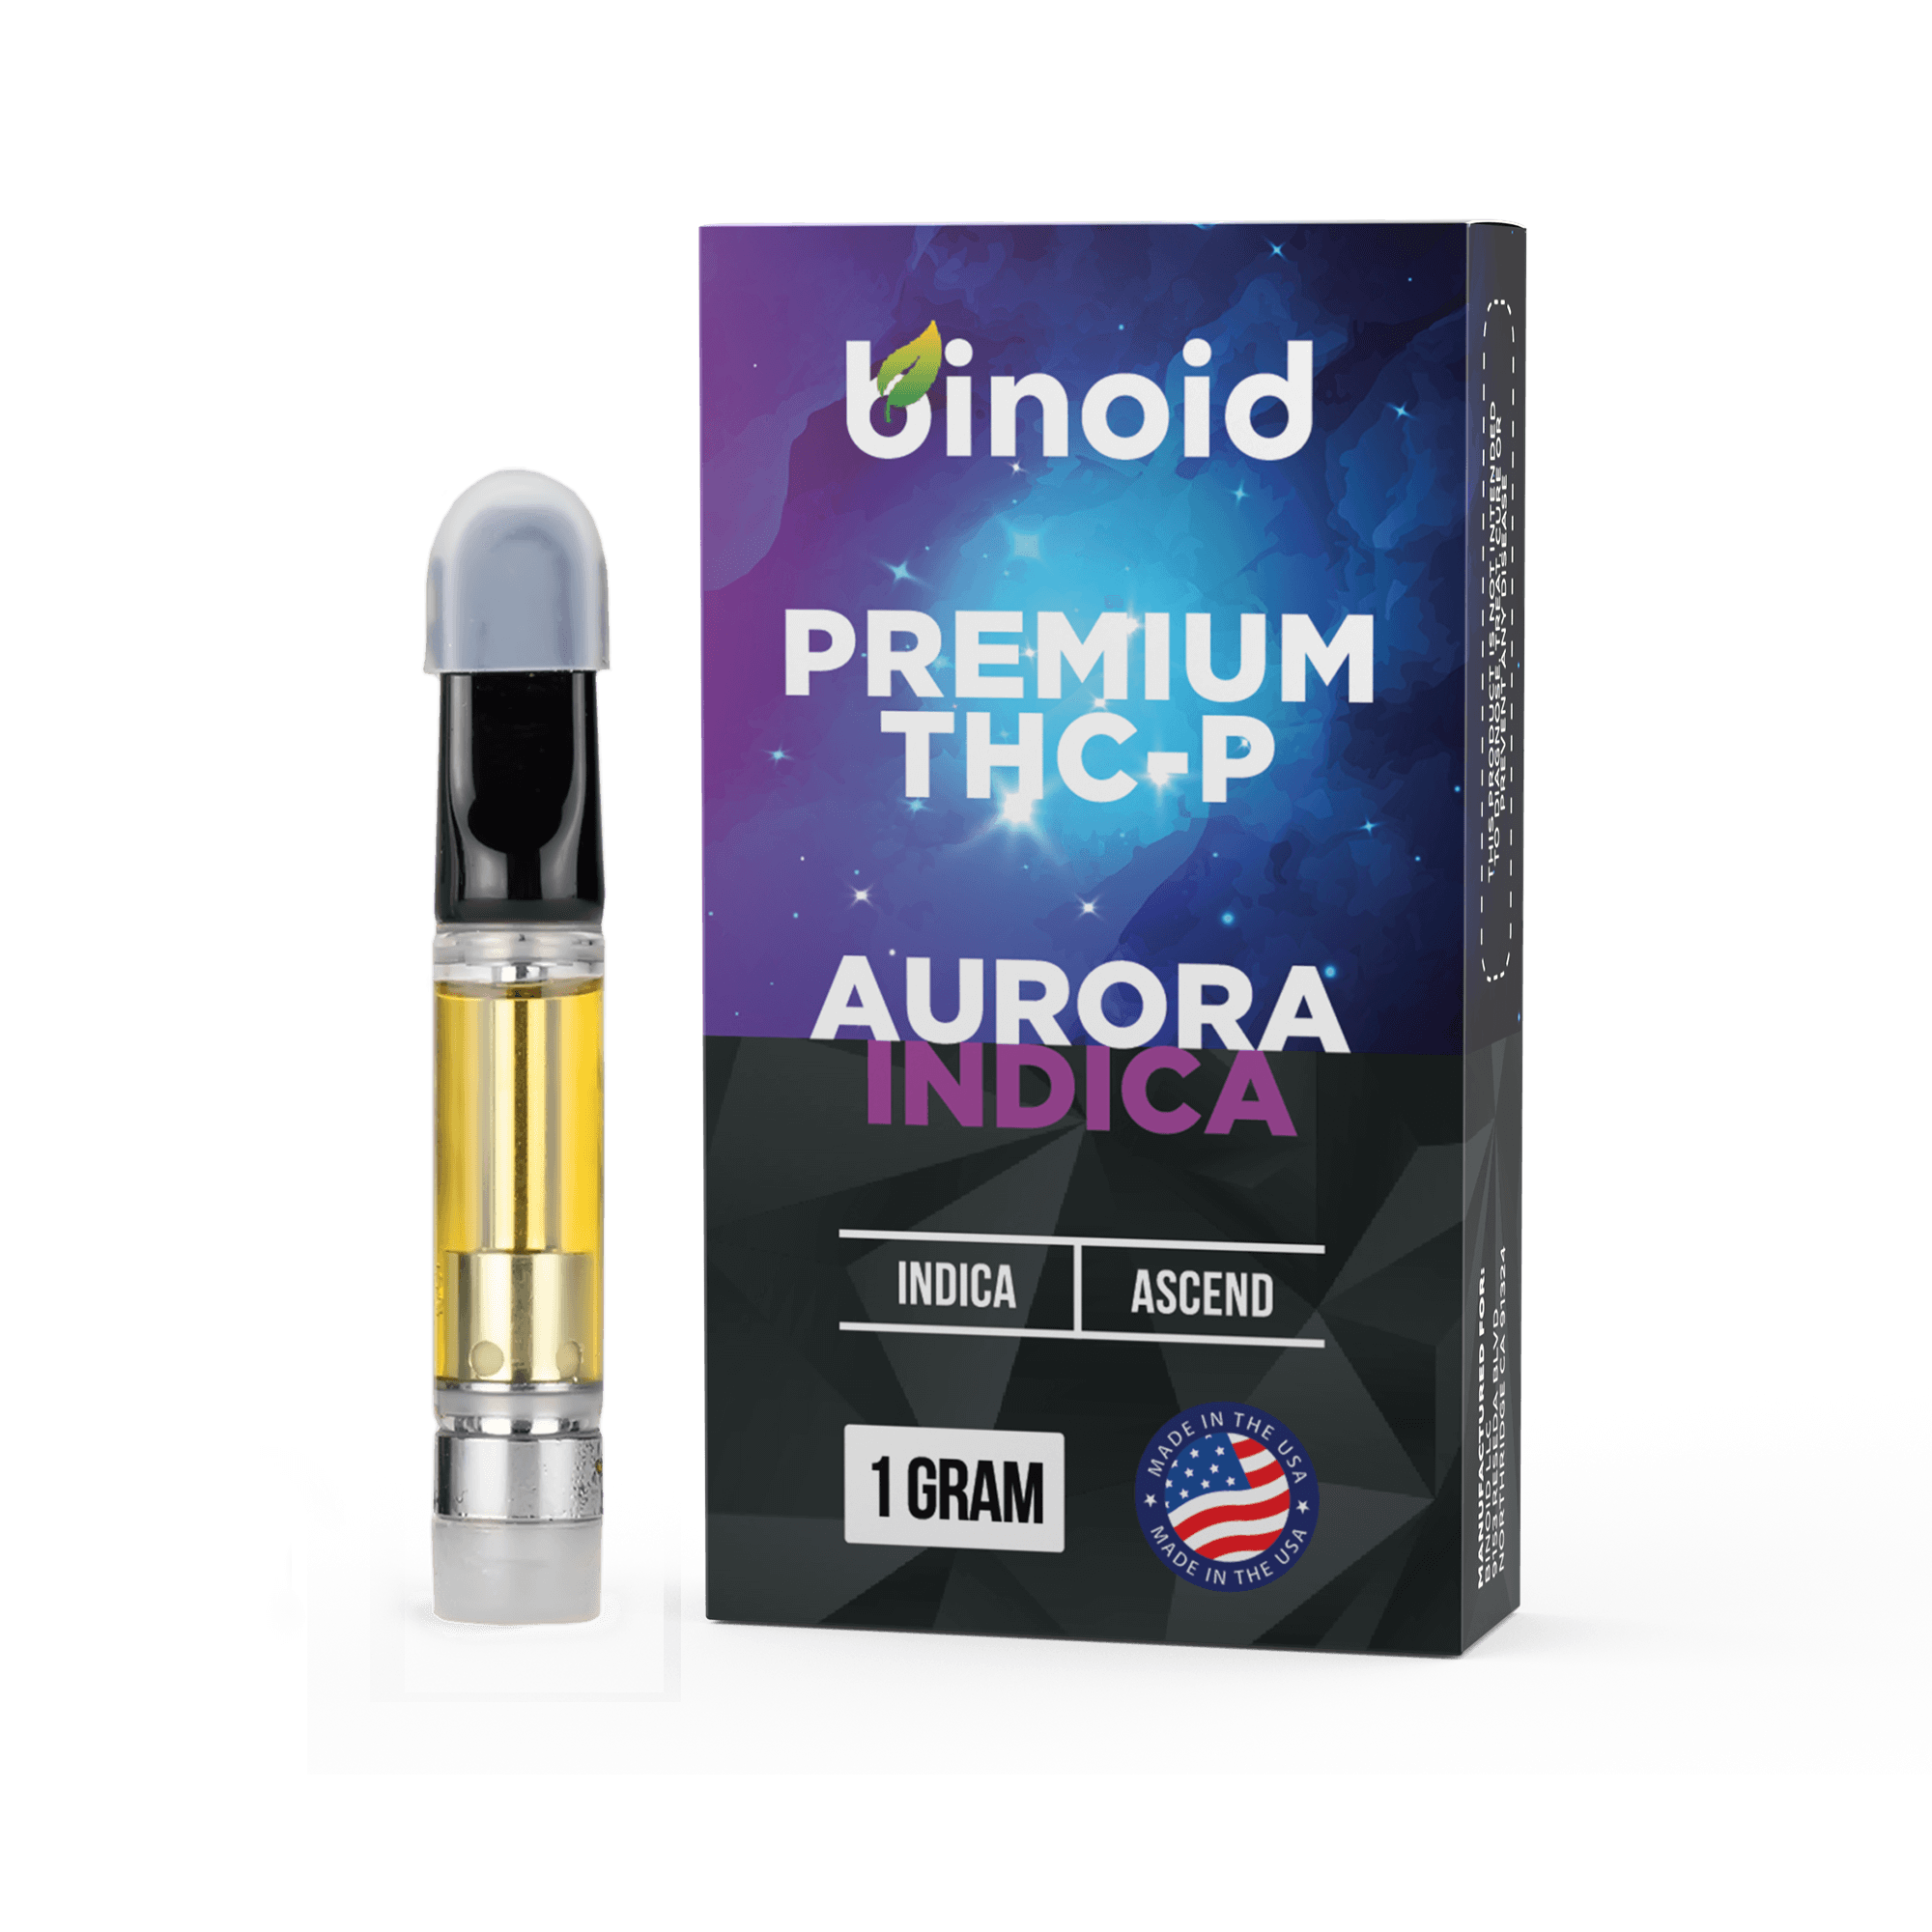 THC-P Vape Cartridges - Aurora Indica For Sale